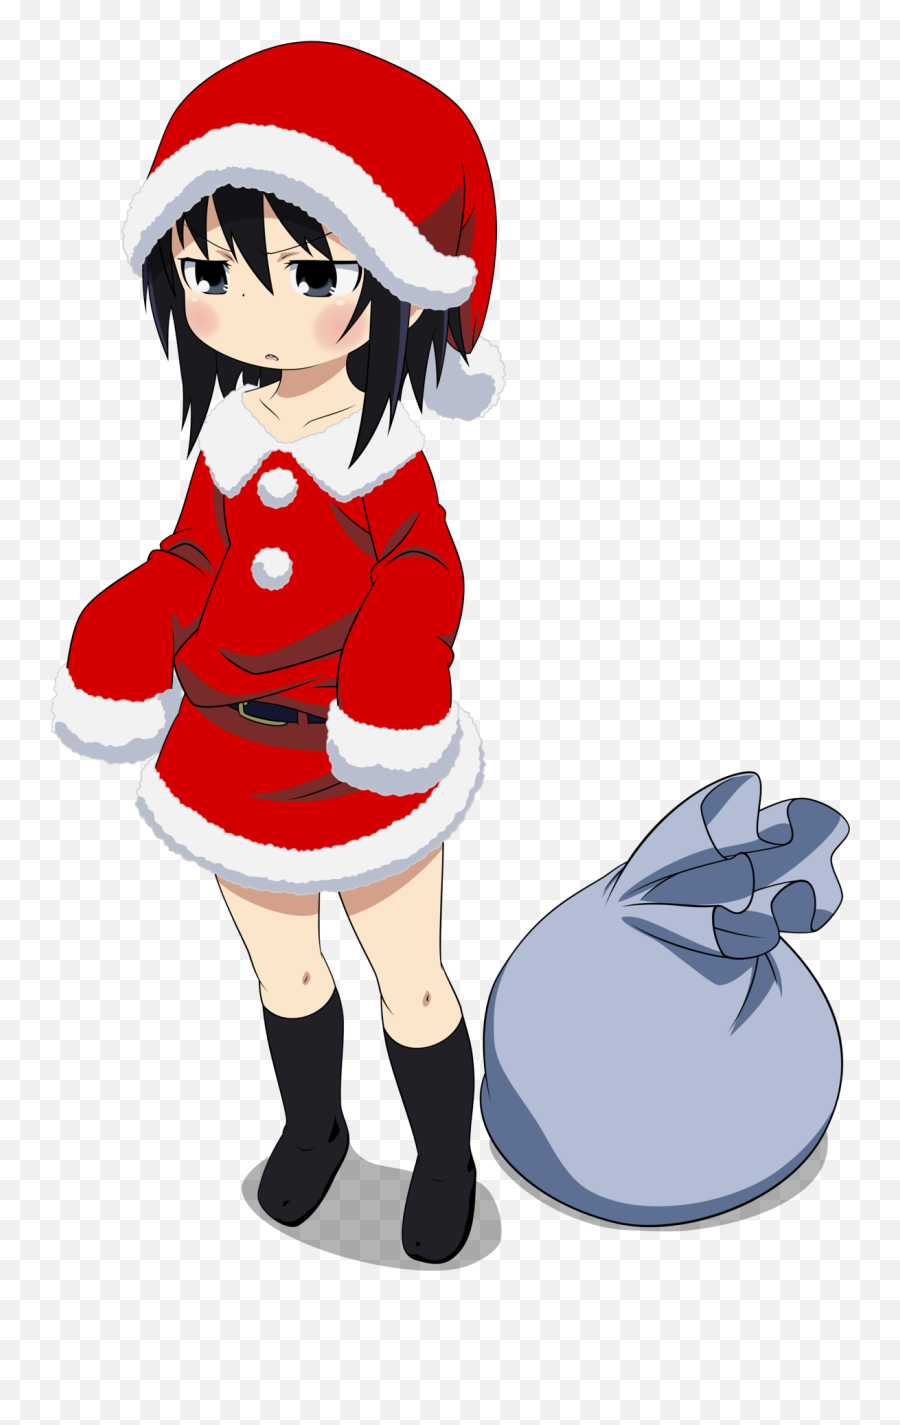 Icons desu Close on Twitter   Matching Icons de MikaYuu Navidad  Christmas Owari No Seraph    Pixiv ID 53991162  httpstcoevQDS8zFEG  Twitter